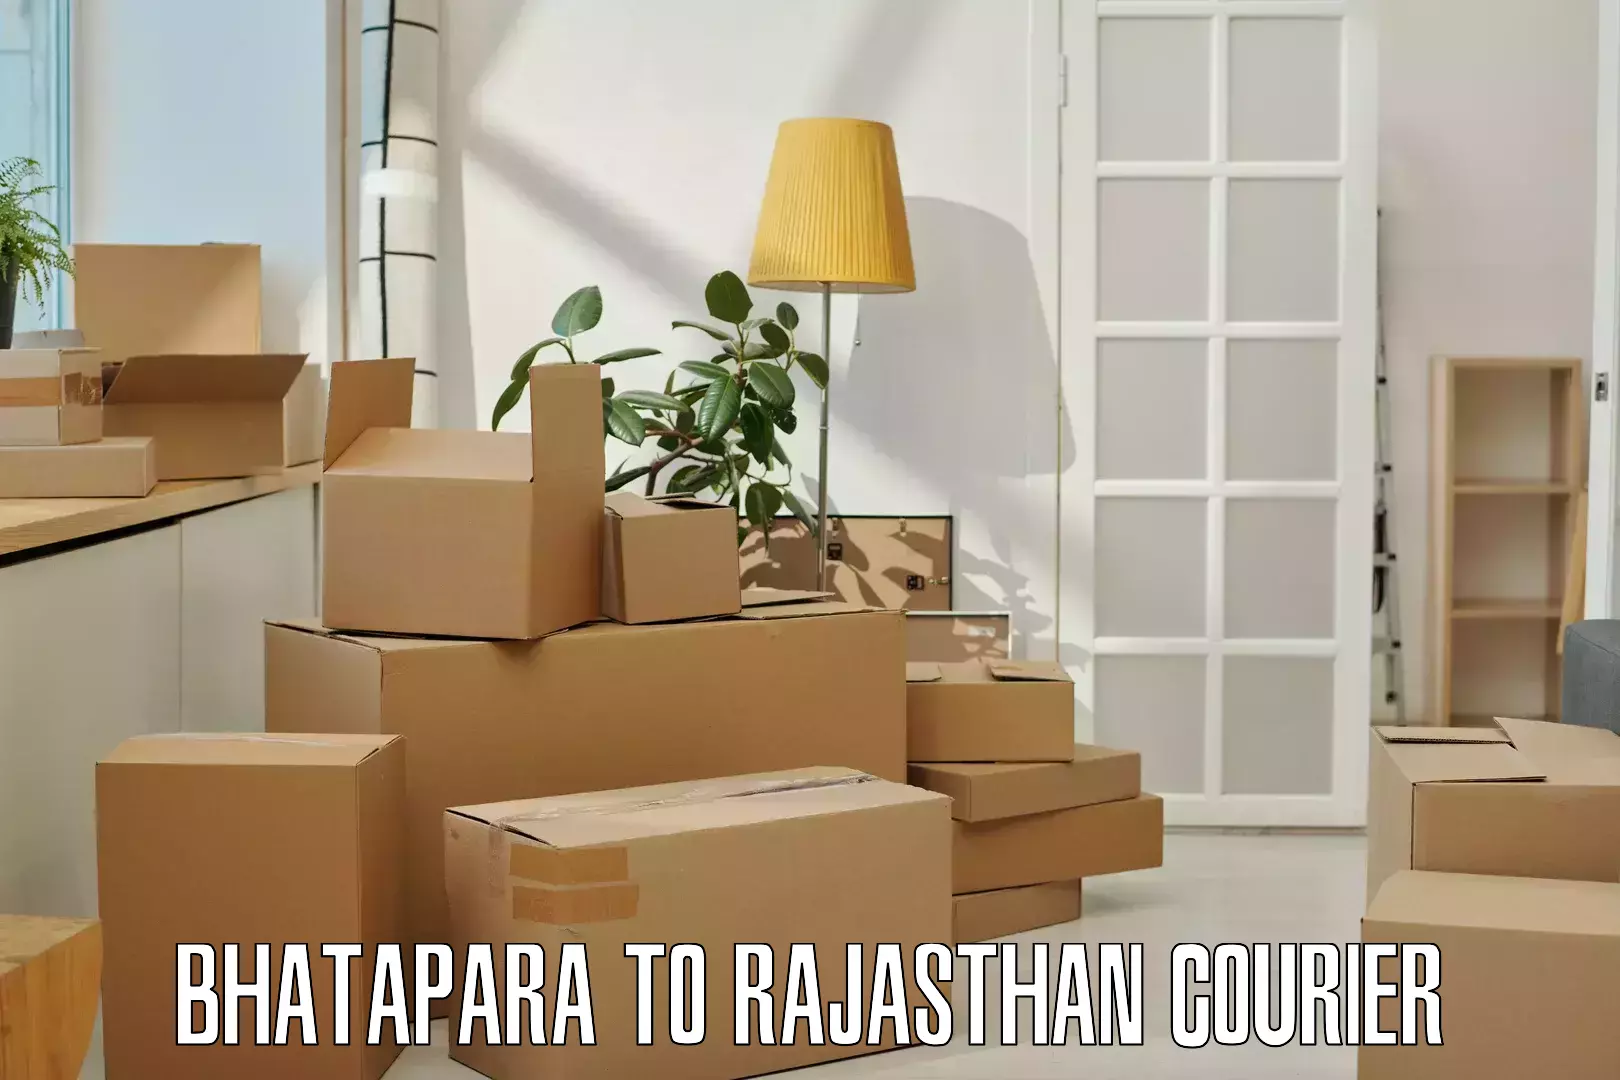 Courier service comparison in Bhatapara to Sri Ganganagar